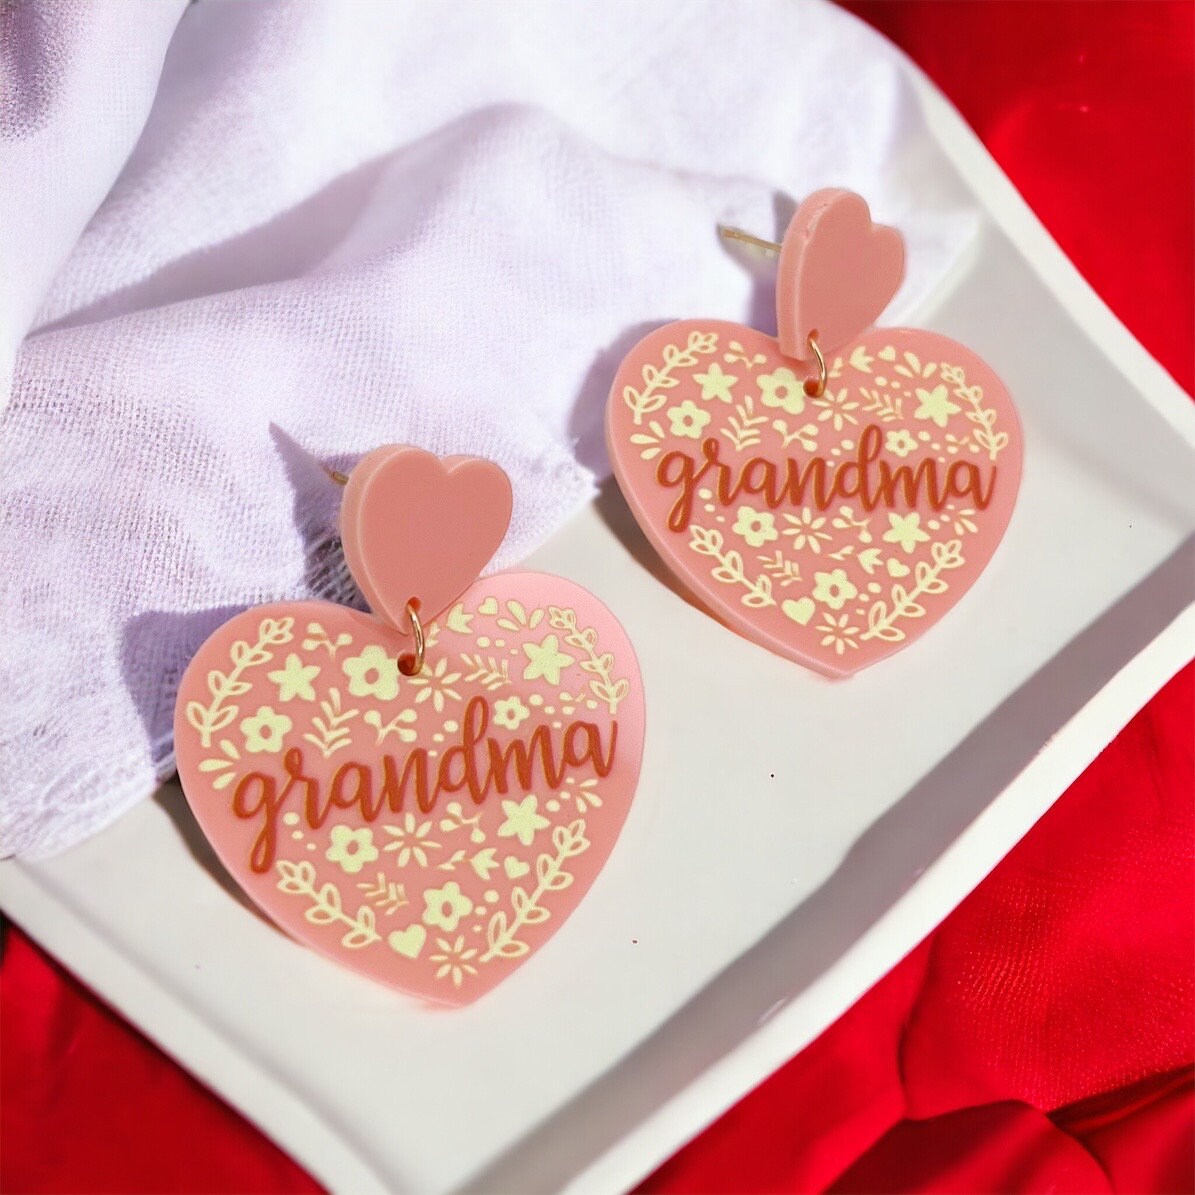 Grandma Earrings - Handmade Earrings, Baby Shower, Mother’s Day, Mom Earrings, Momma Earrings, Pregnancy Announcement, Gender Reveal, Hearts